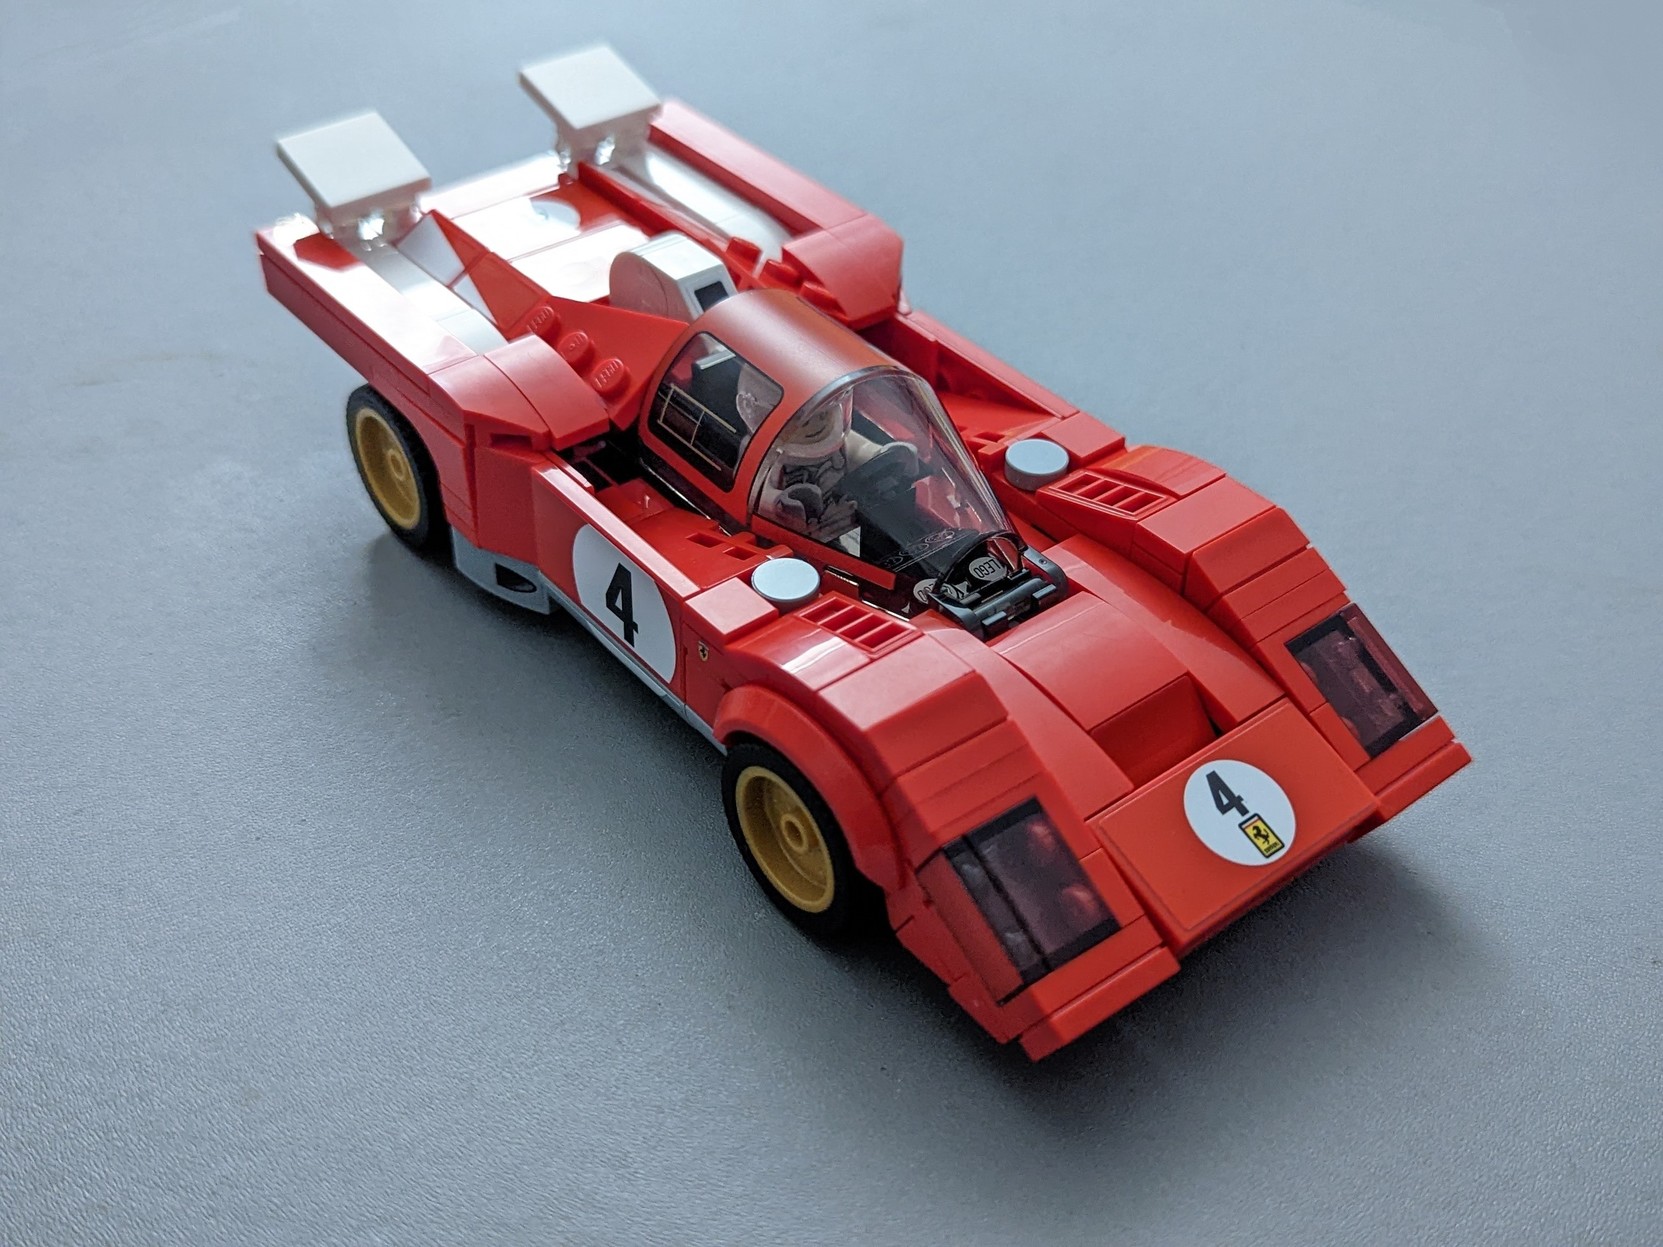 A completed Lego model of a 1970 Ferrari 512 M #76906